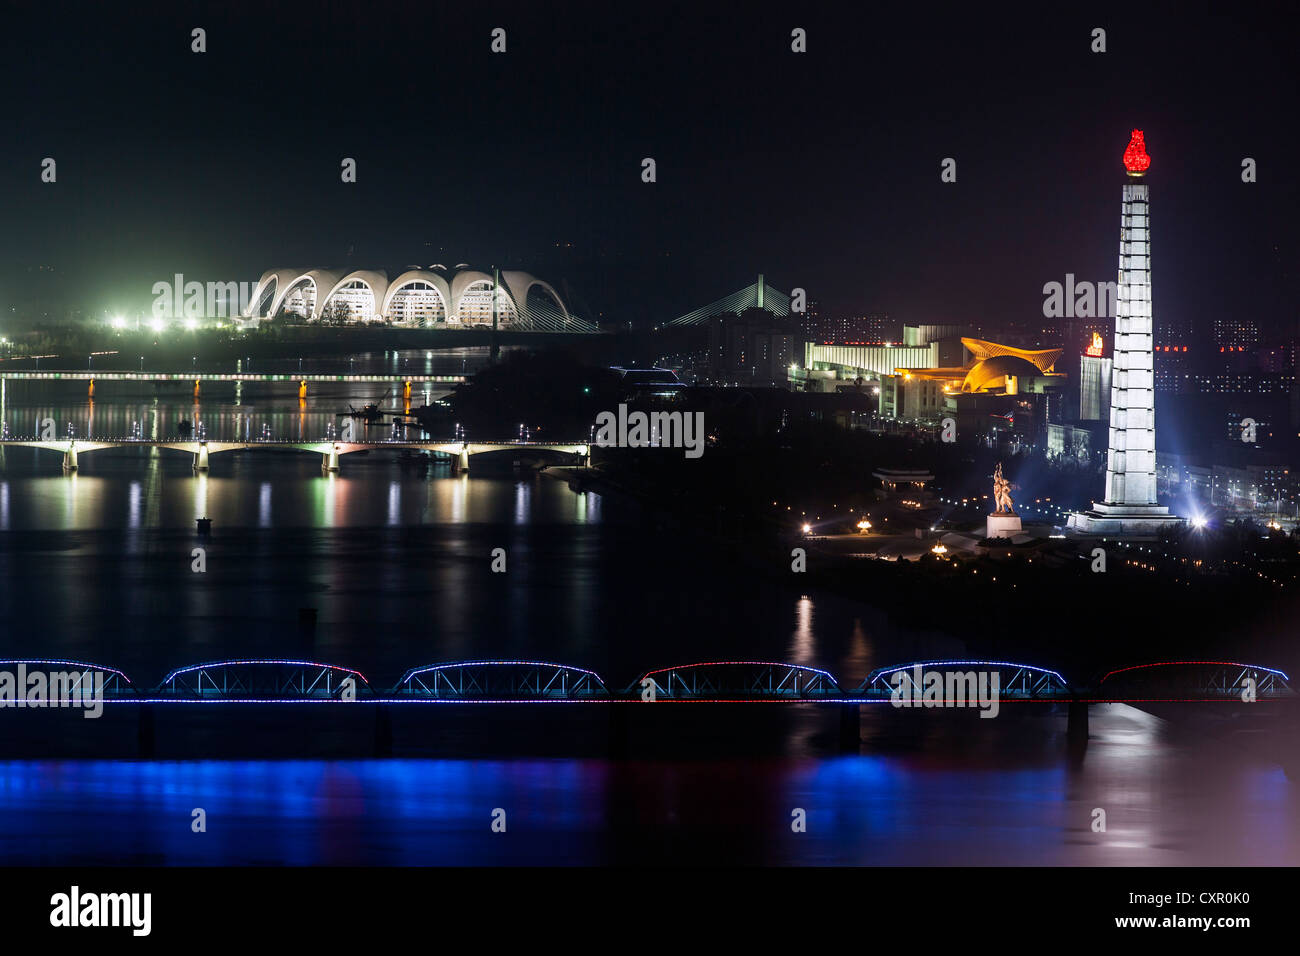 Democratic Peoples's Republic of Korea (DPRK), North Korea, Pyongyang, Juche Tower and Taedong river illuminated at night Stock Photo